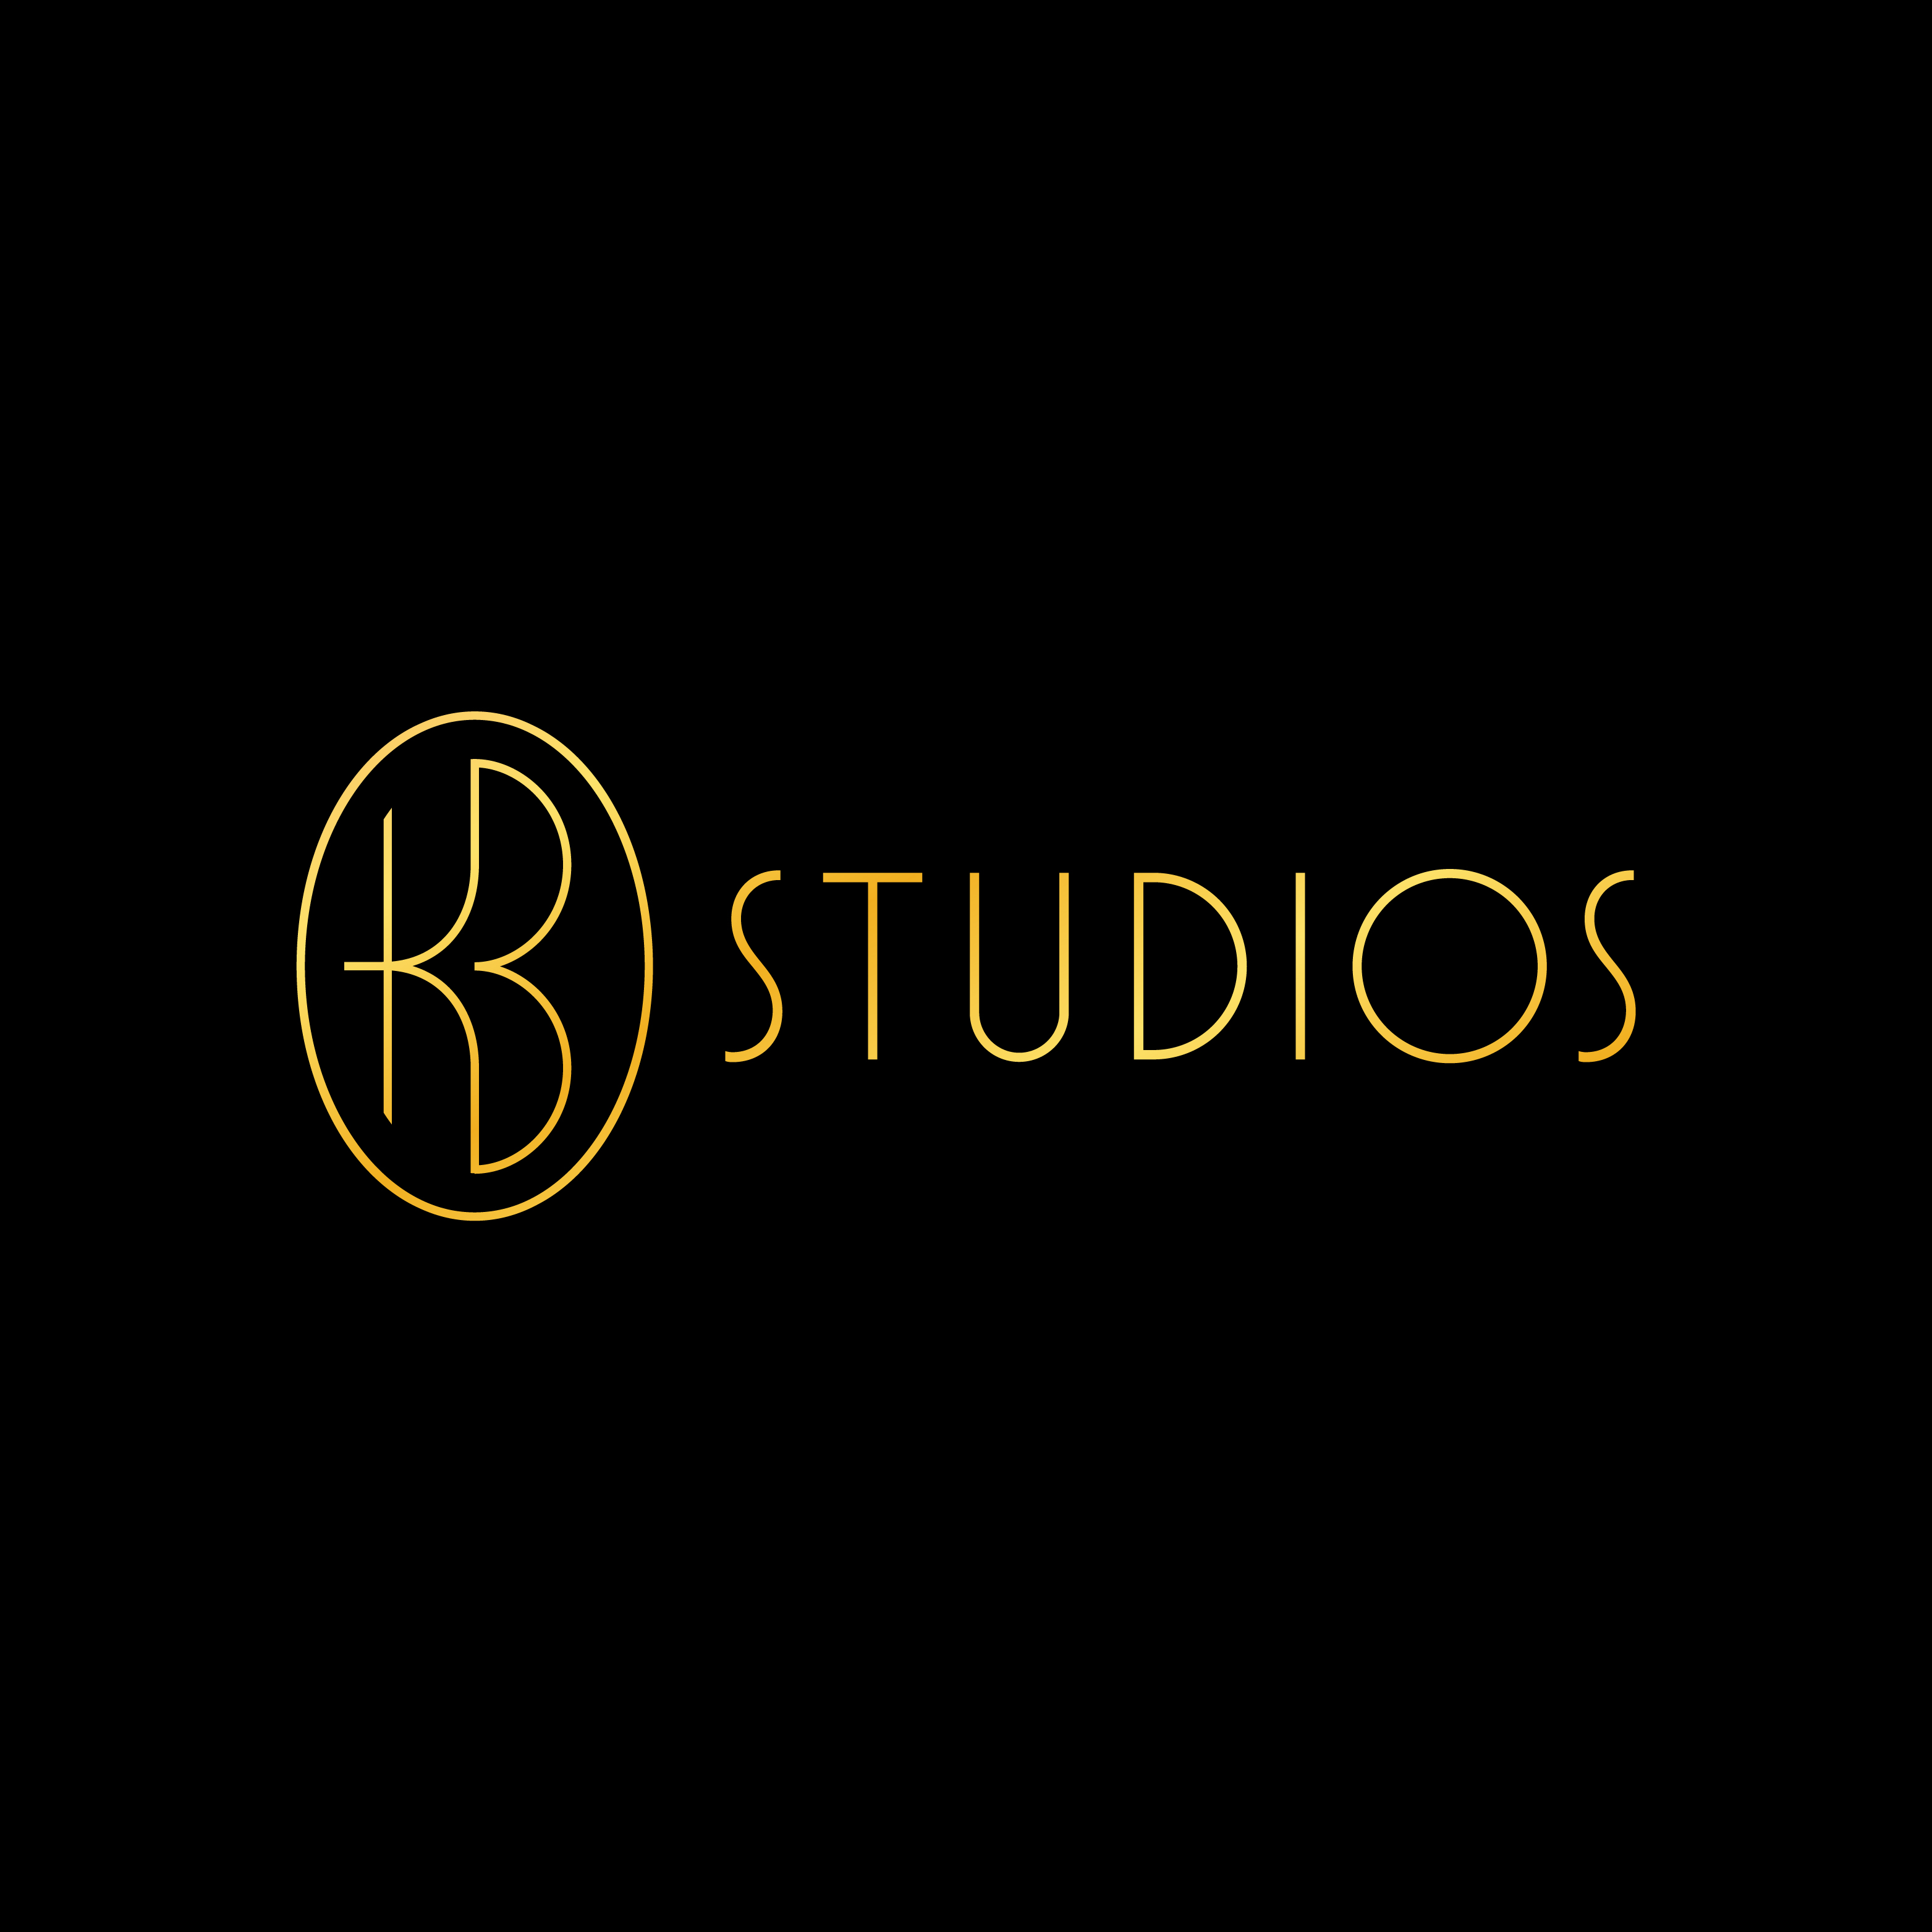 KB Studios logo by Hunter Oden of oden.house